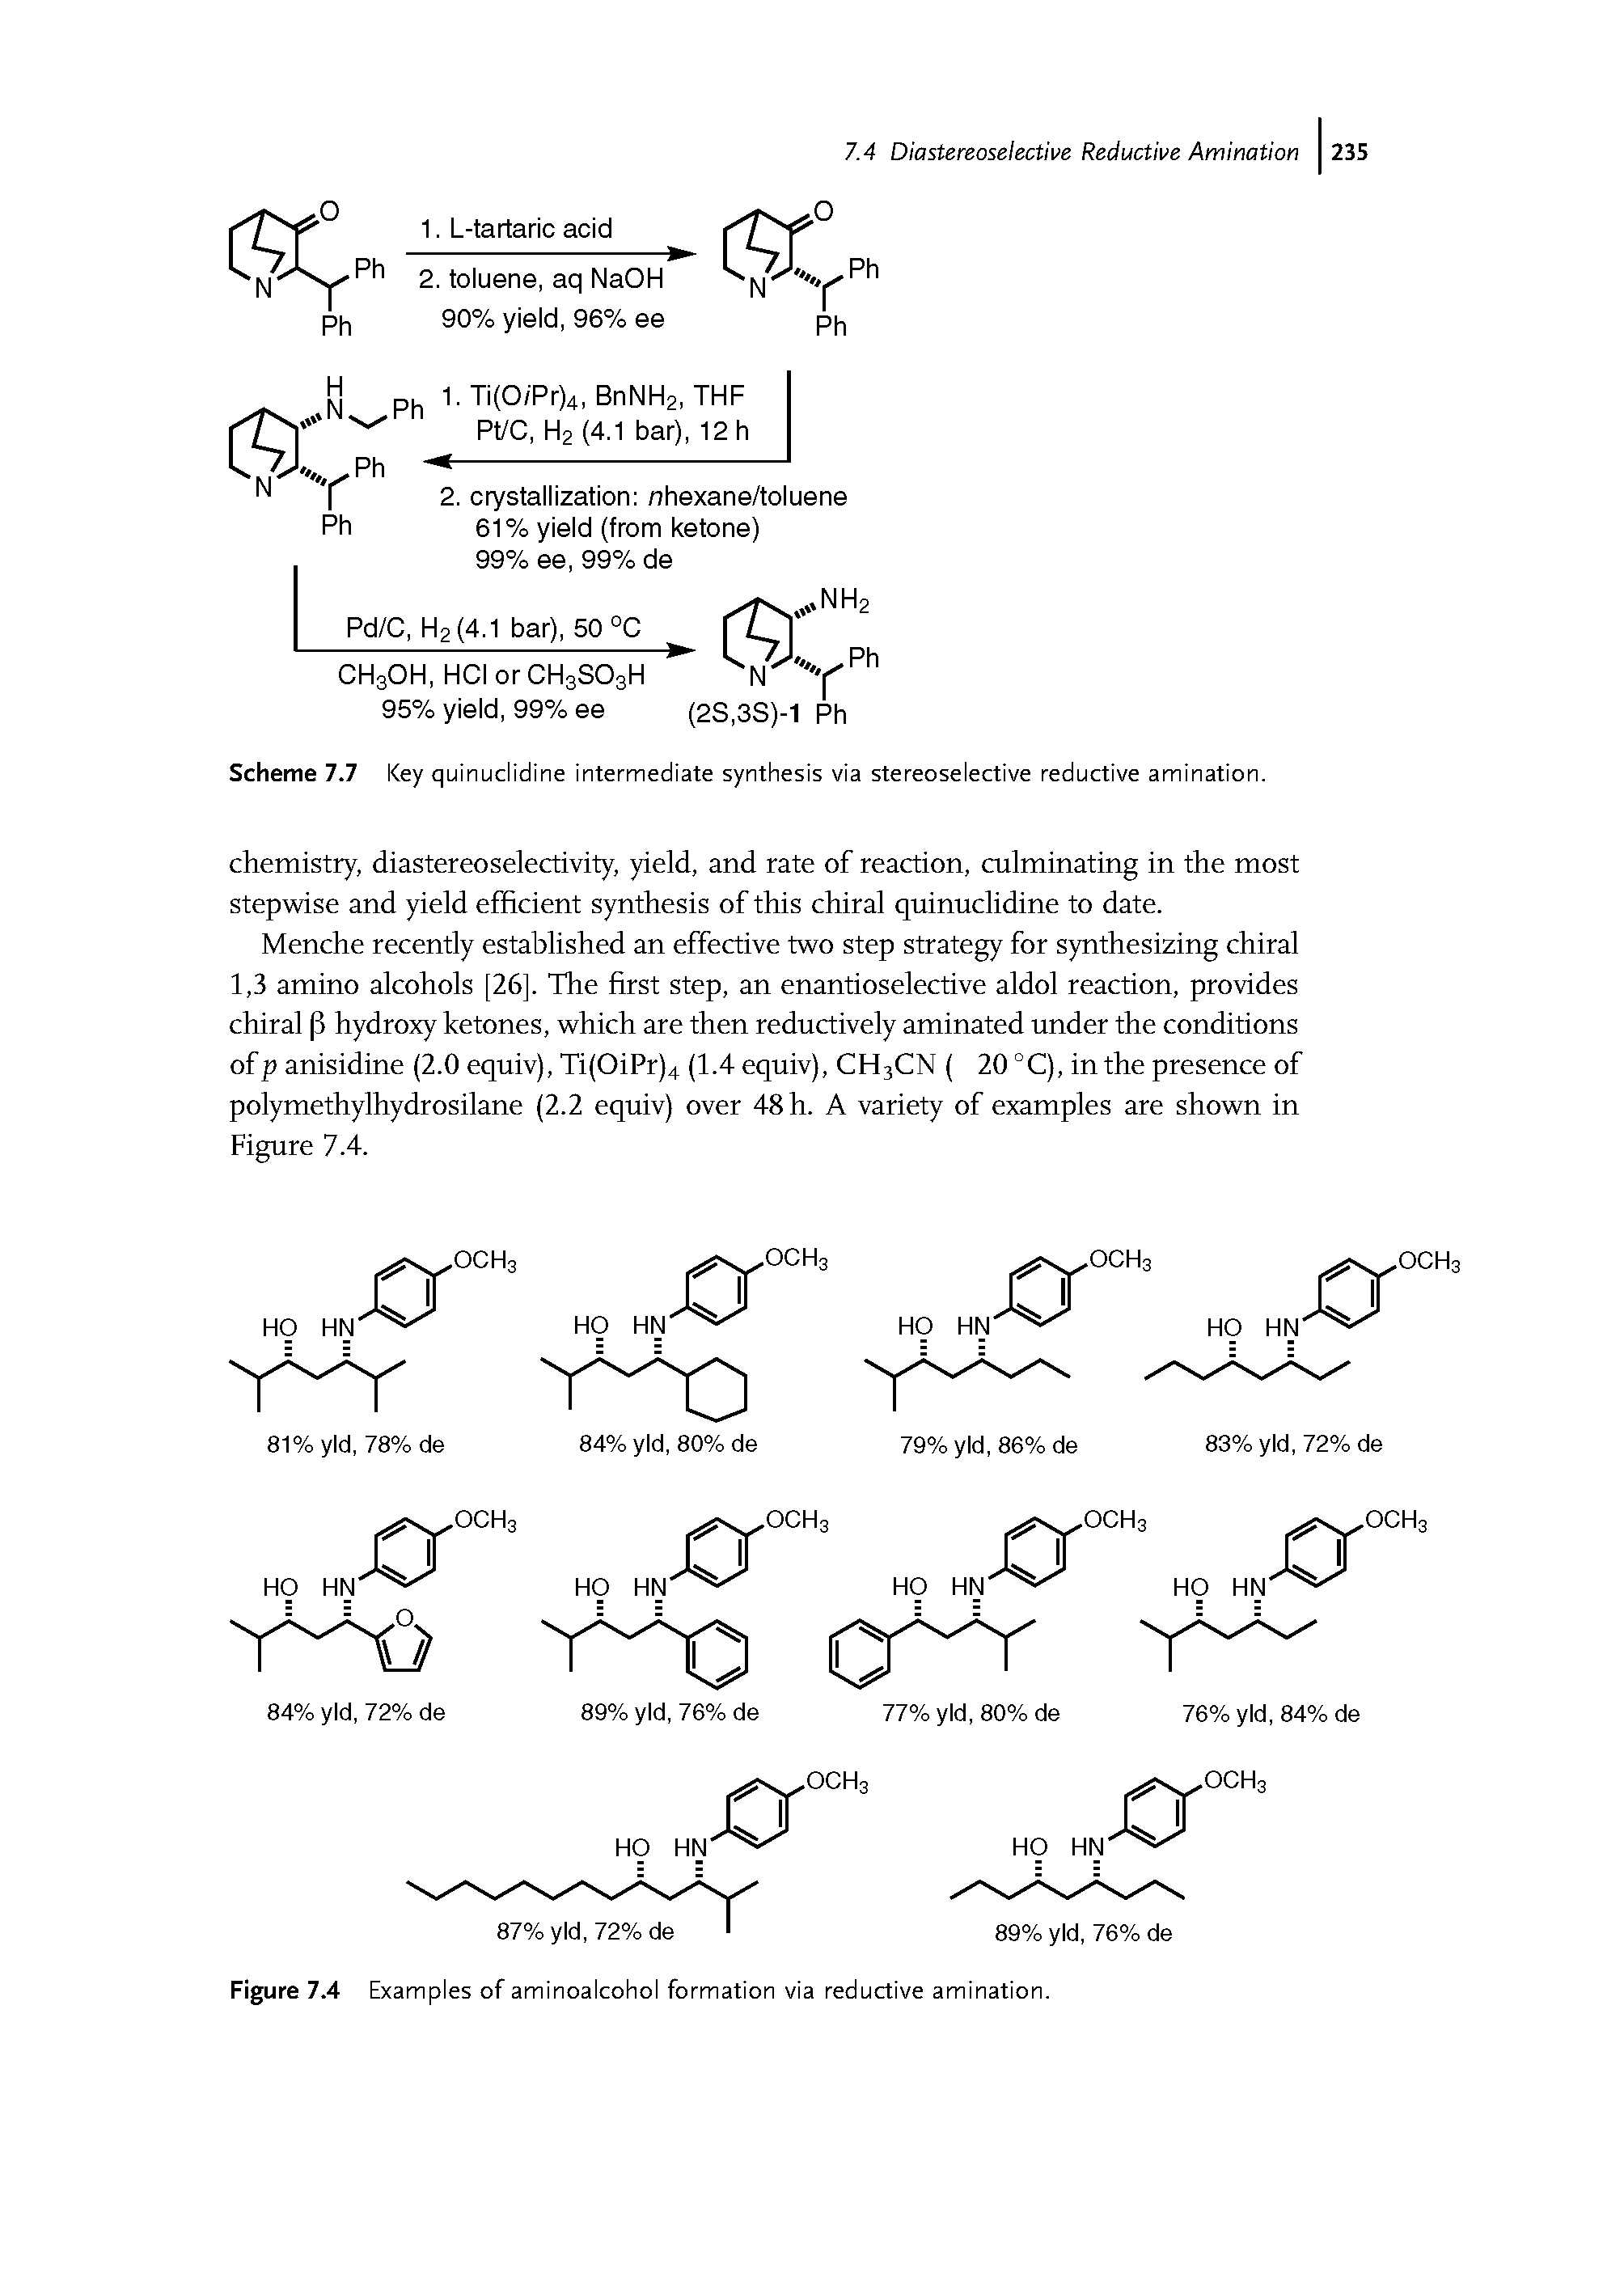 Figure 7.4 Examples of aminoalcohol formation via reductive amination.